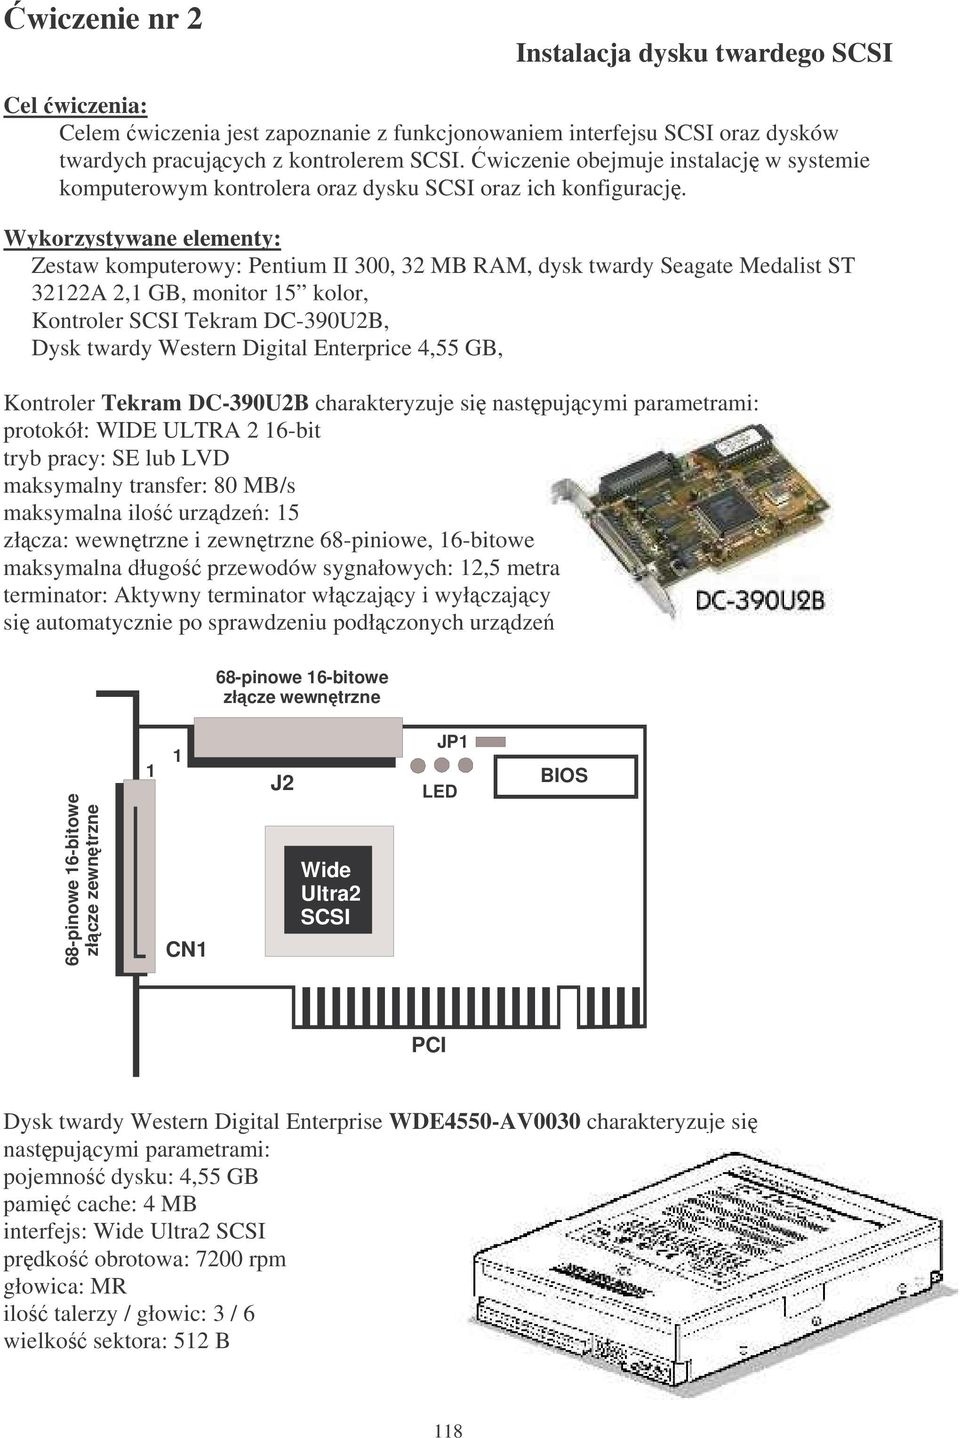 Wykorzystywane elementy: Zestaw komputerowy: Pentium II 300, 32 MB RAM, dysk twardy Seagate Medalist ST 32122A 2,1 GB, monitor 15 kolor, Kontroler SCSI Tekram DC-390U2B, Dysk twardy Western Digital